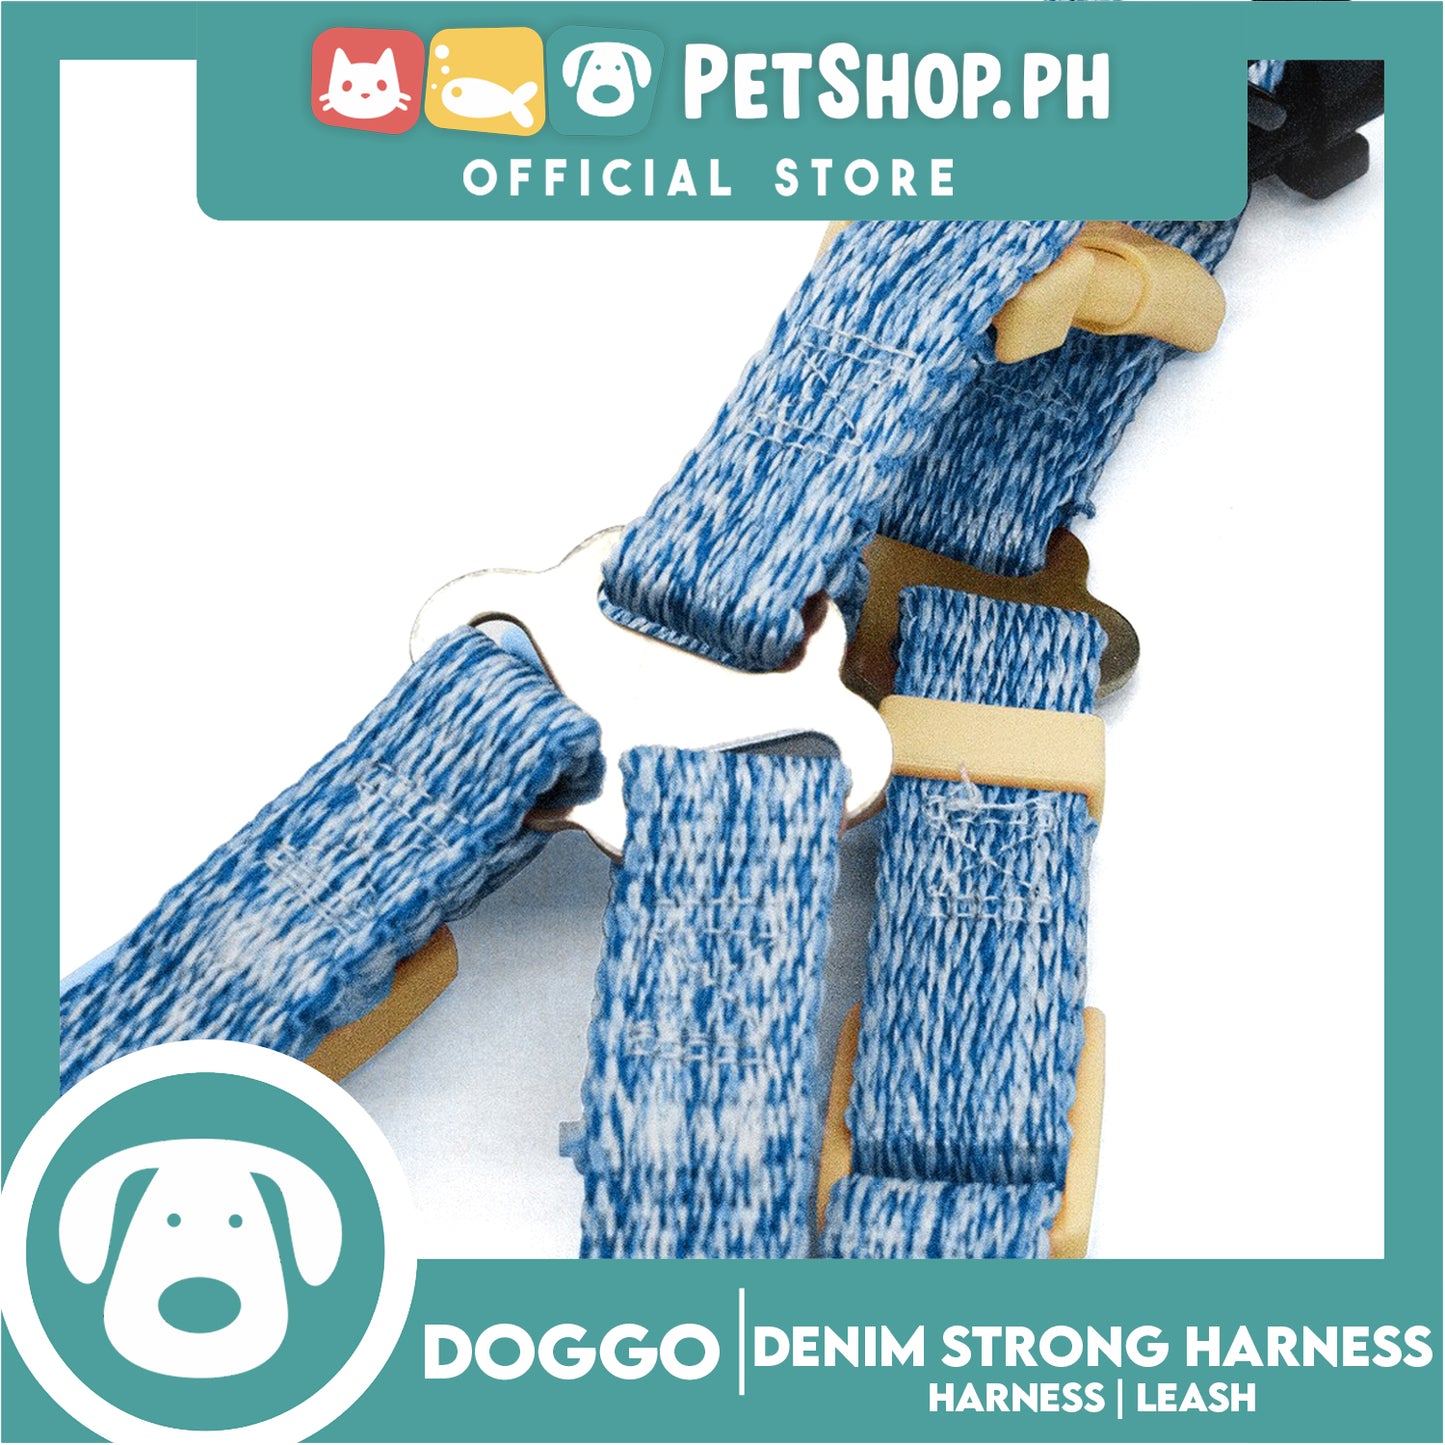 Doggo Atlanta Strong Harness and Leash Set Extra Small Size (Orange)